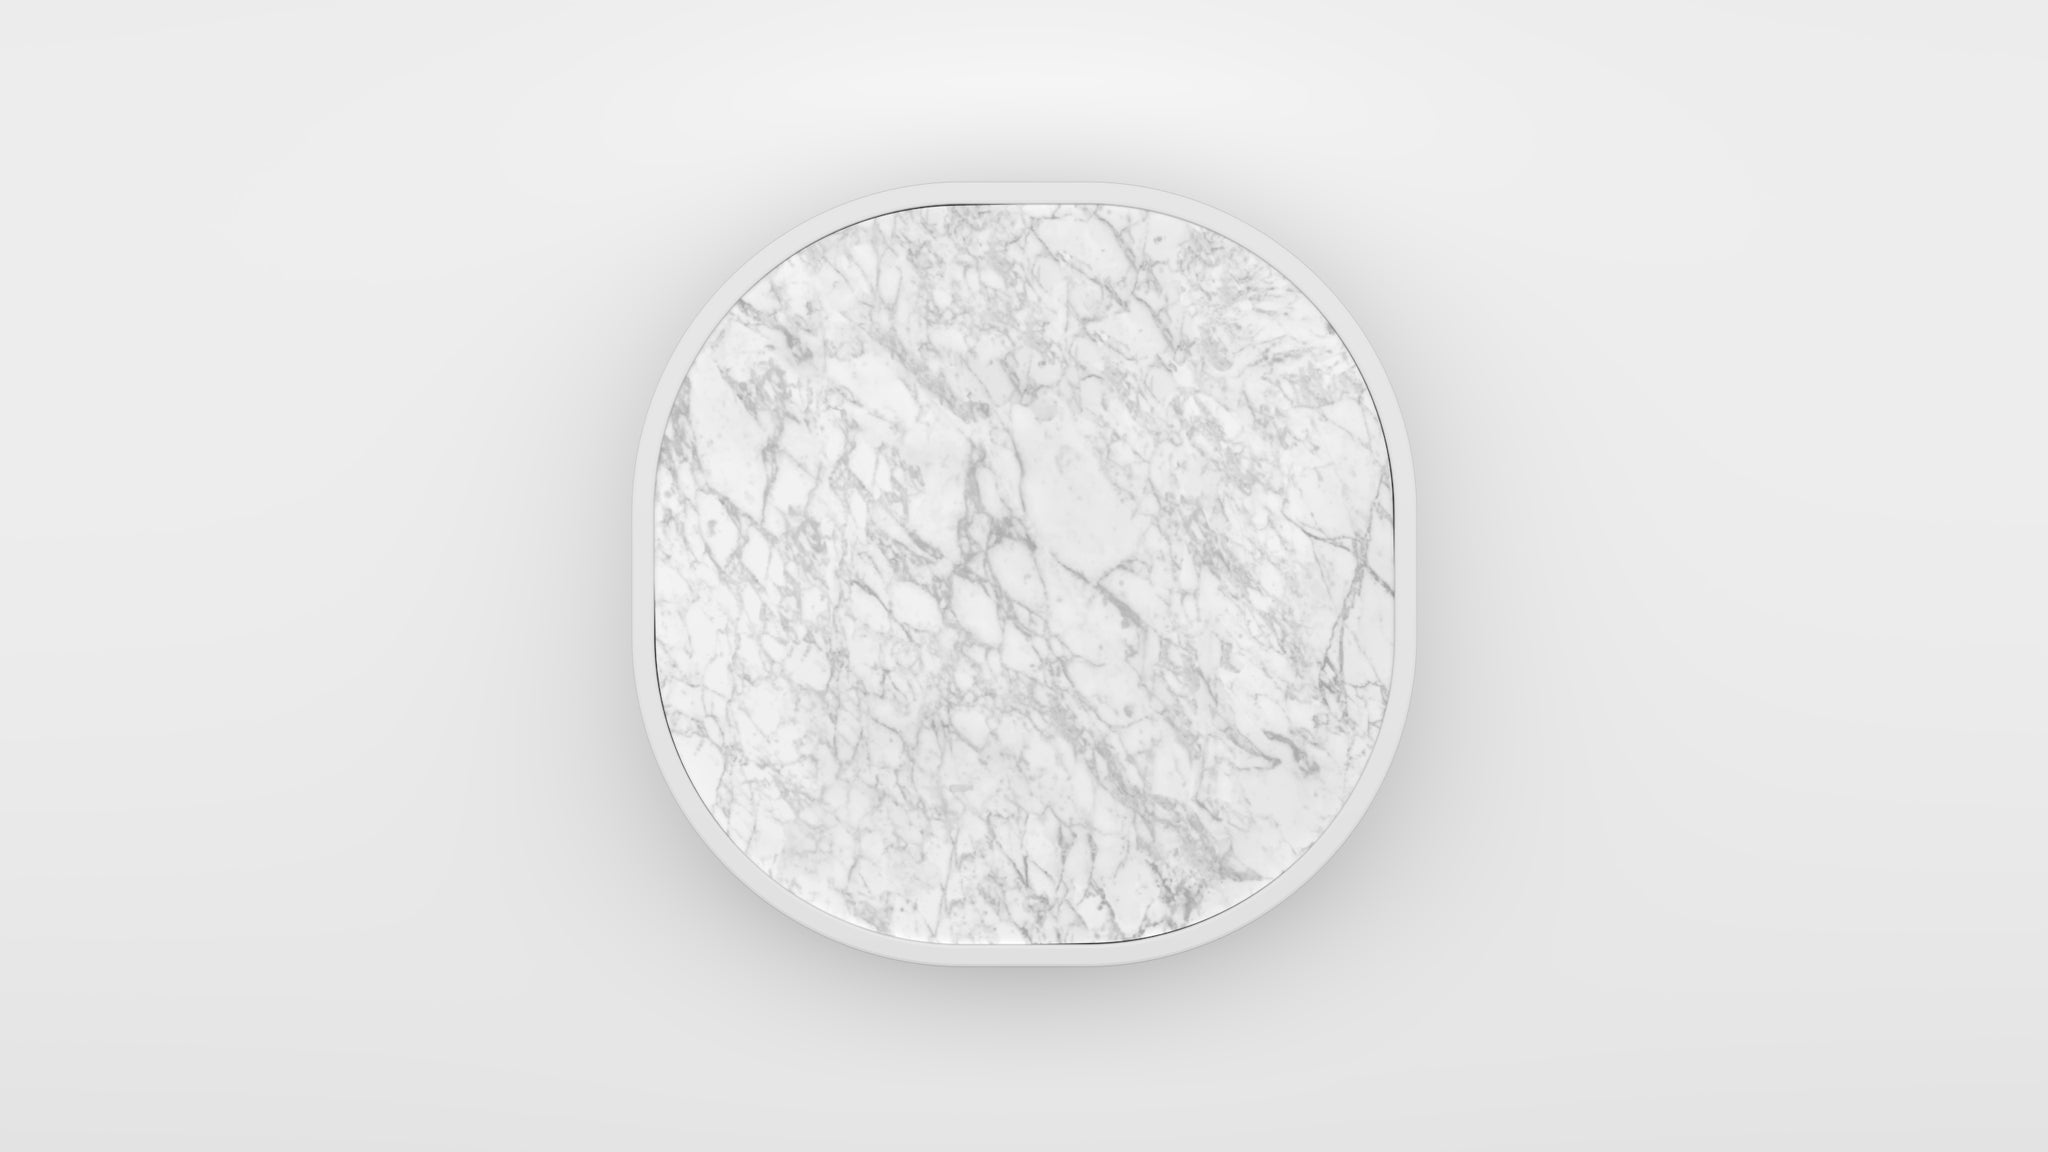 Carrara marble, white marble coffee table, white marble, akar white lacquer, akar fine lacquer, akar lacquer, glossy lacquer, low coffee table, marble coffee table, precious marble